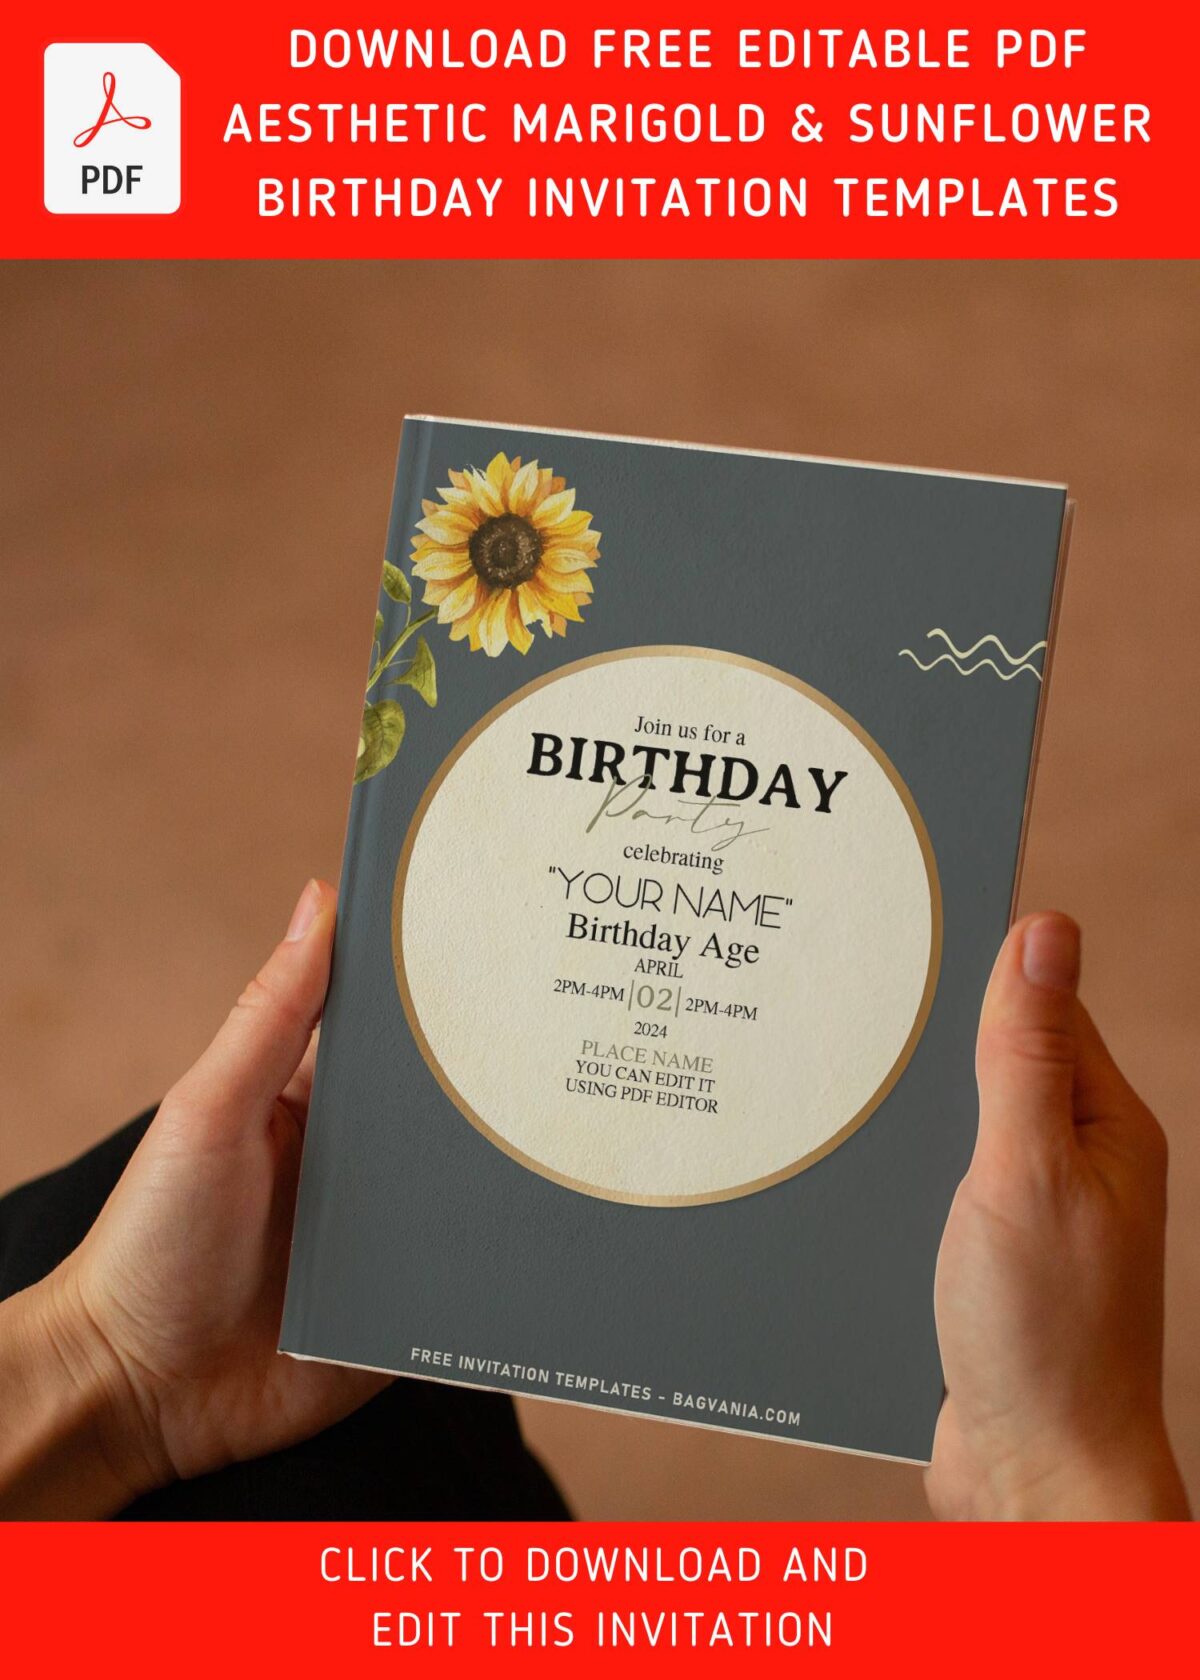 (Free Editable PDF) Aesthetic Marigold & Sunflower Garden Birthday Invitation with watercolor marigold